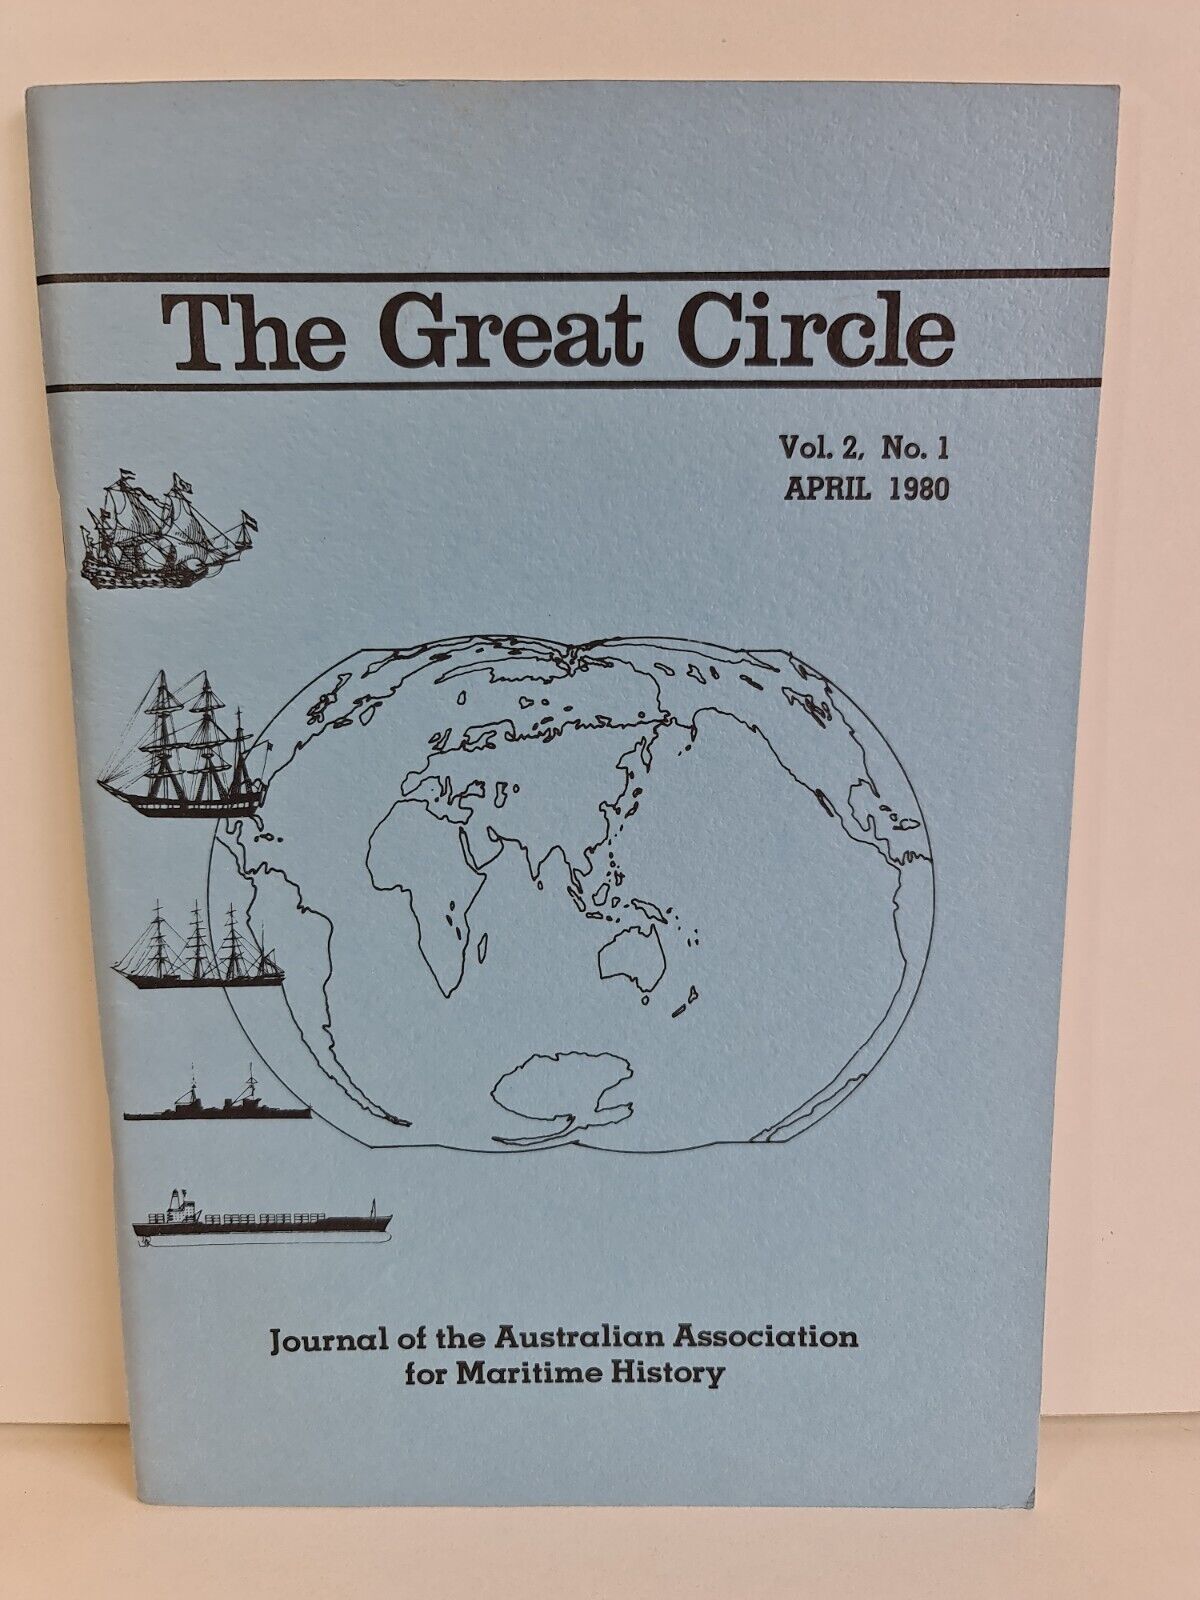 The Great Circle Vol 2 No. 1 April 1980 - Journal Australian Maritime History